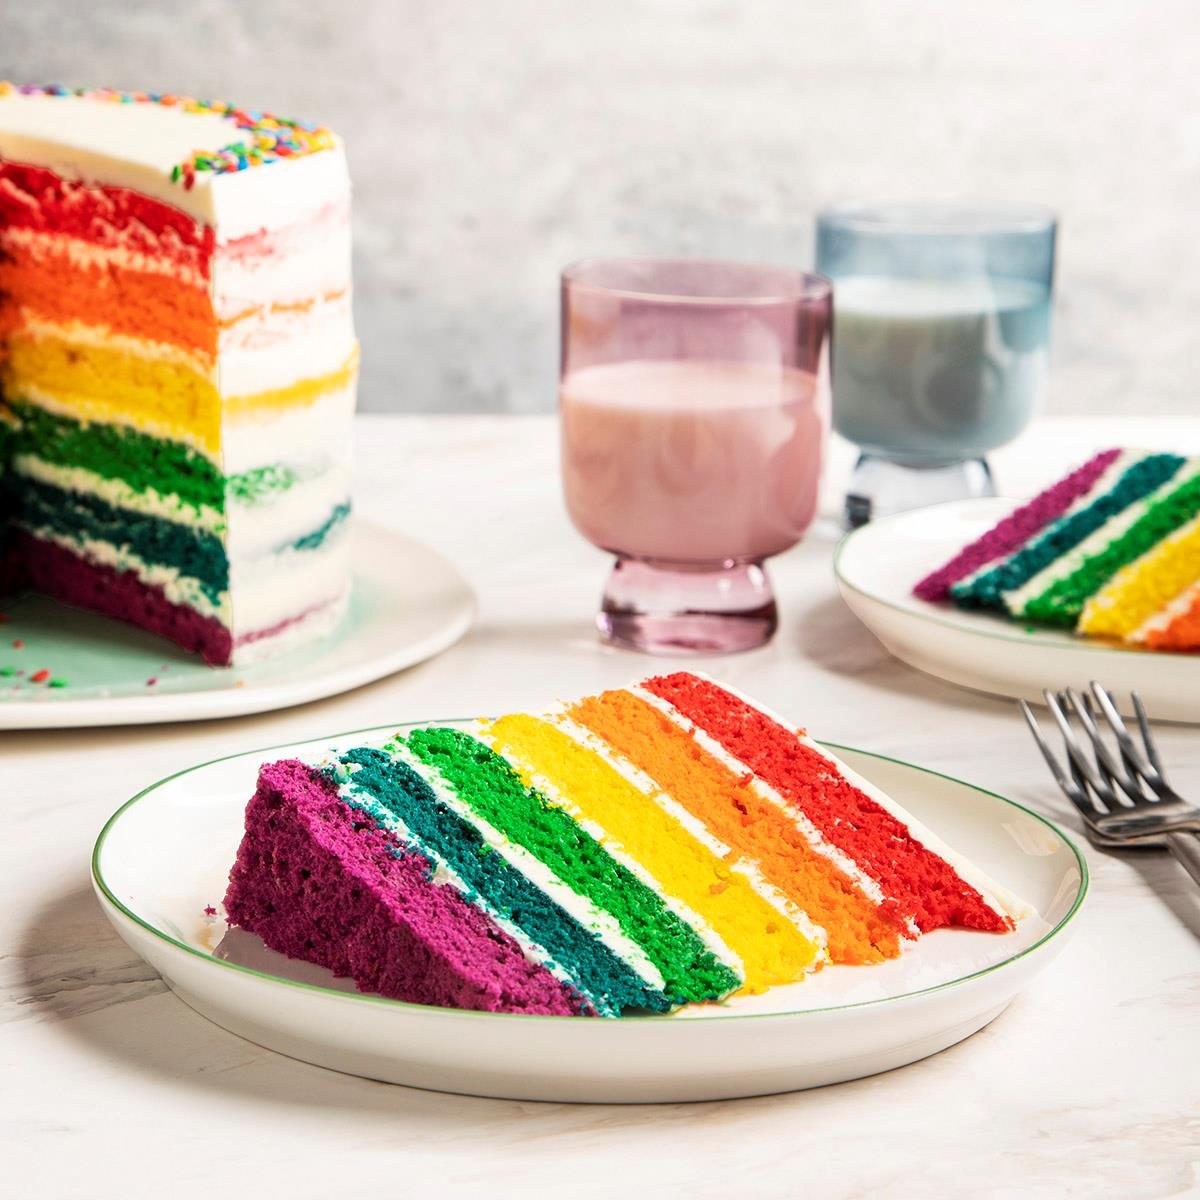 Naked Rainbow Layer Cake Recipe | HGTV